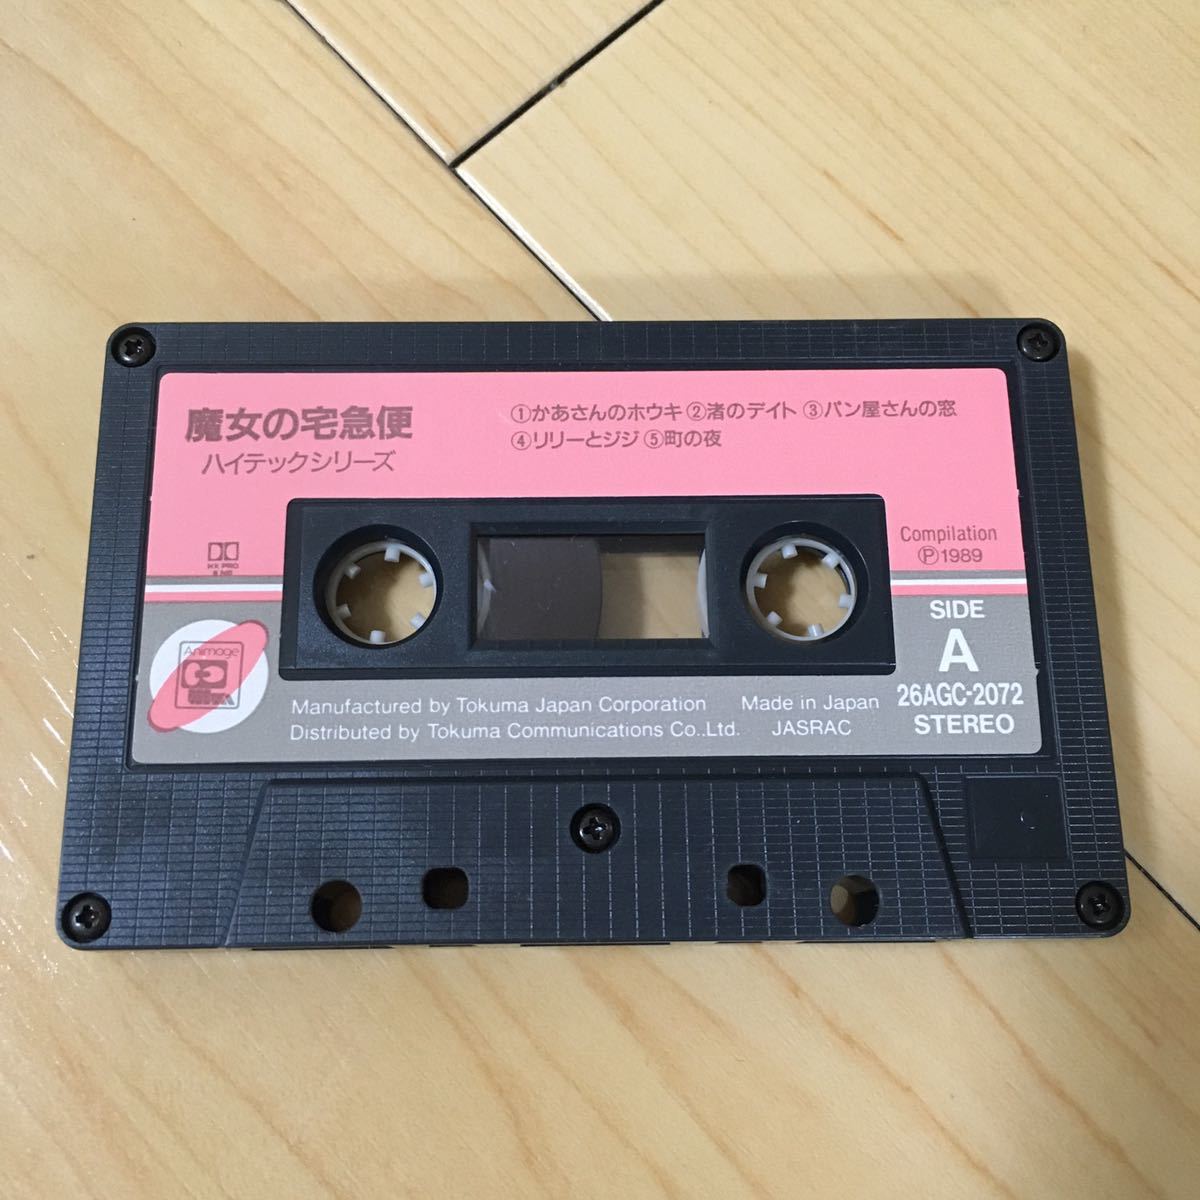  cassette tape Majo no Takkyubin high Tec series that time thing Showa Retro rare Ghibli Showa Retro soundtrack Animage soundtrack 